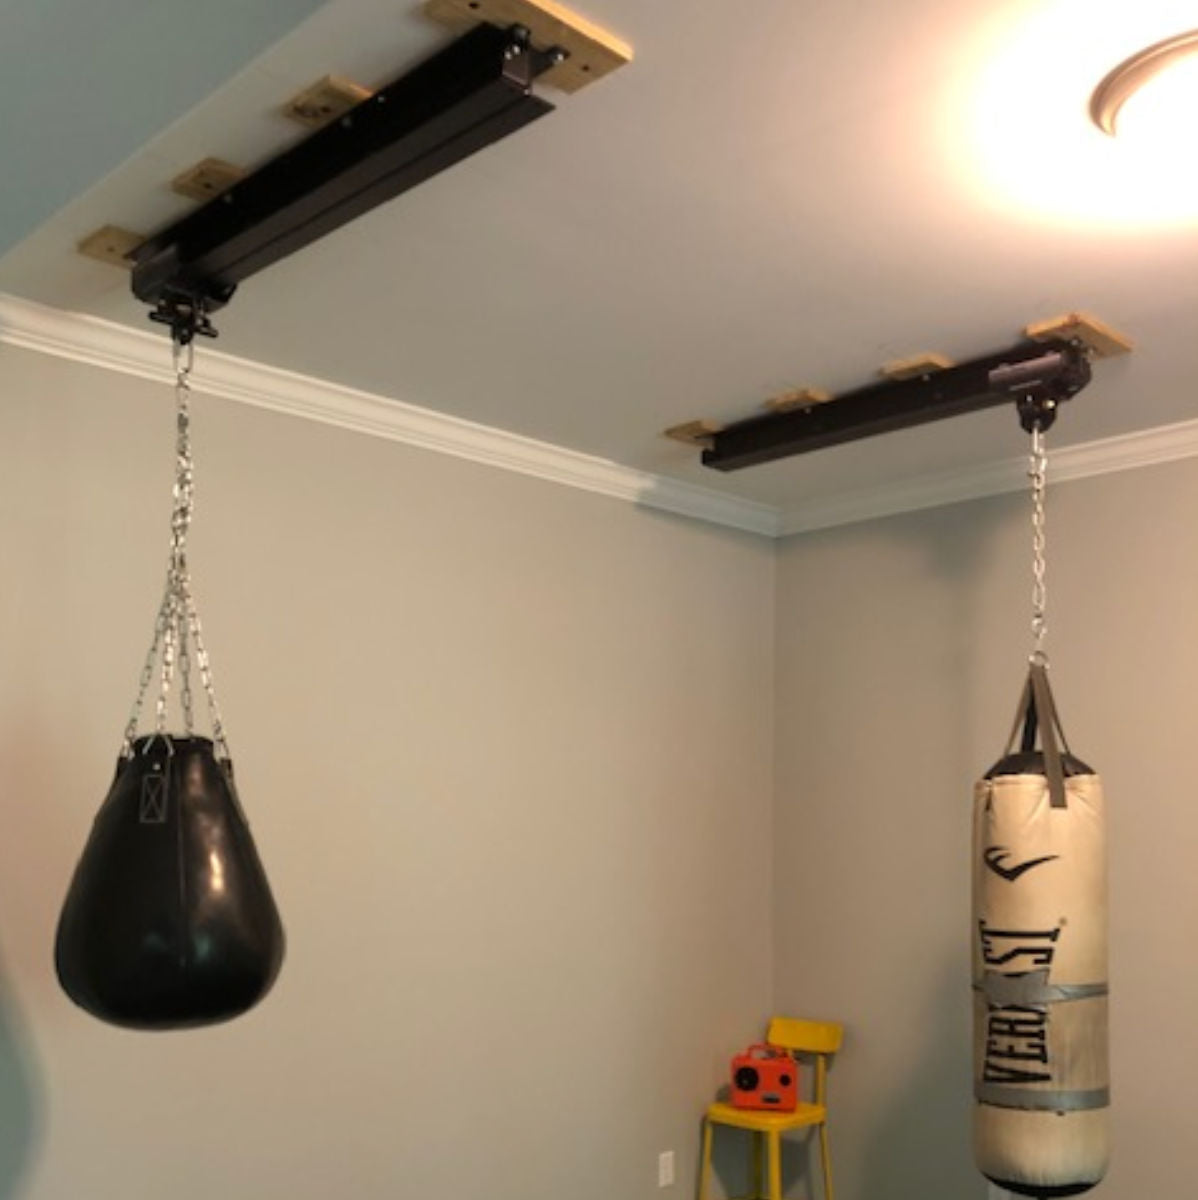 How to Hang a Punching Bag - RDX Sports Blog